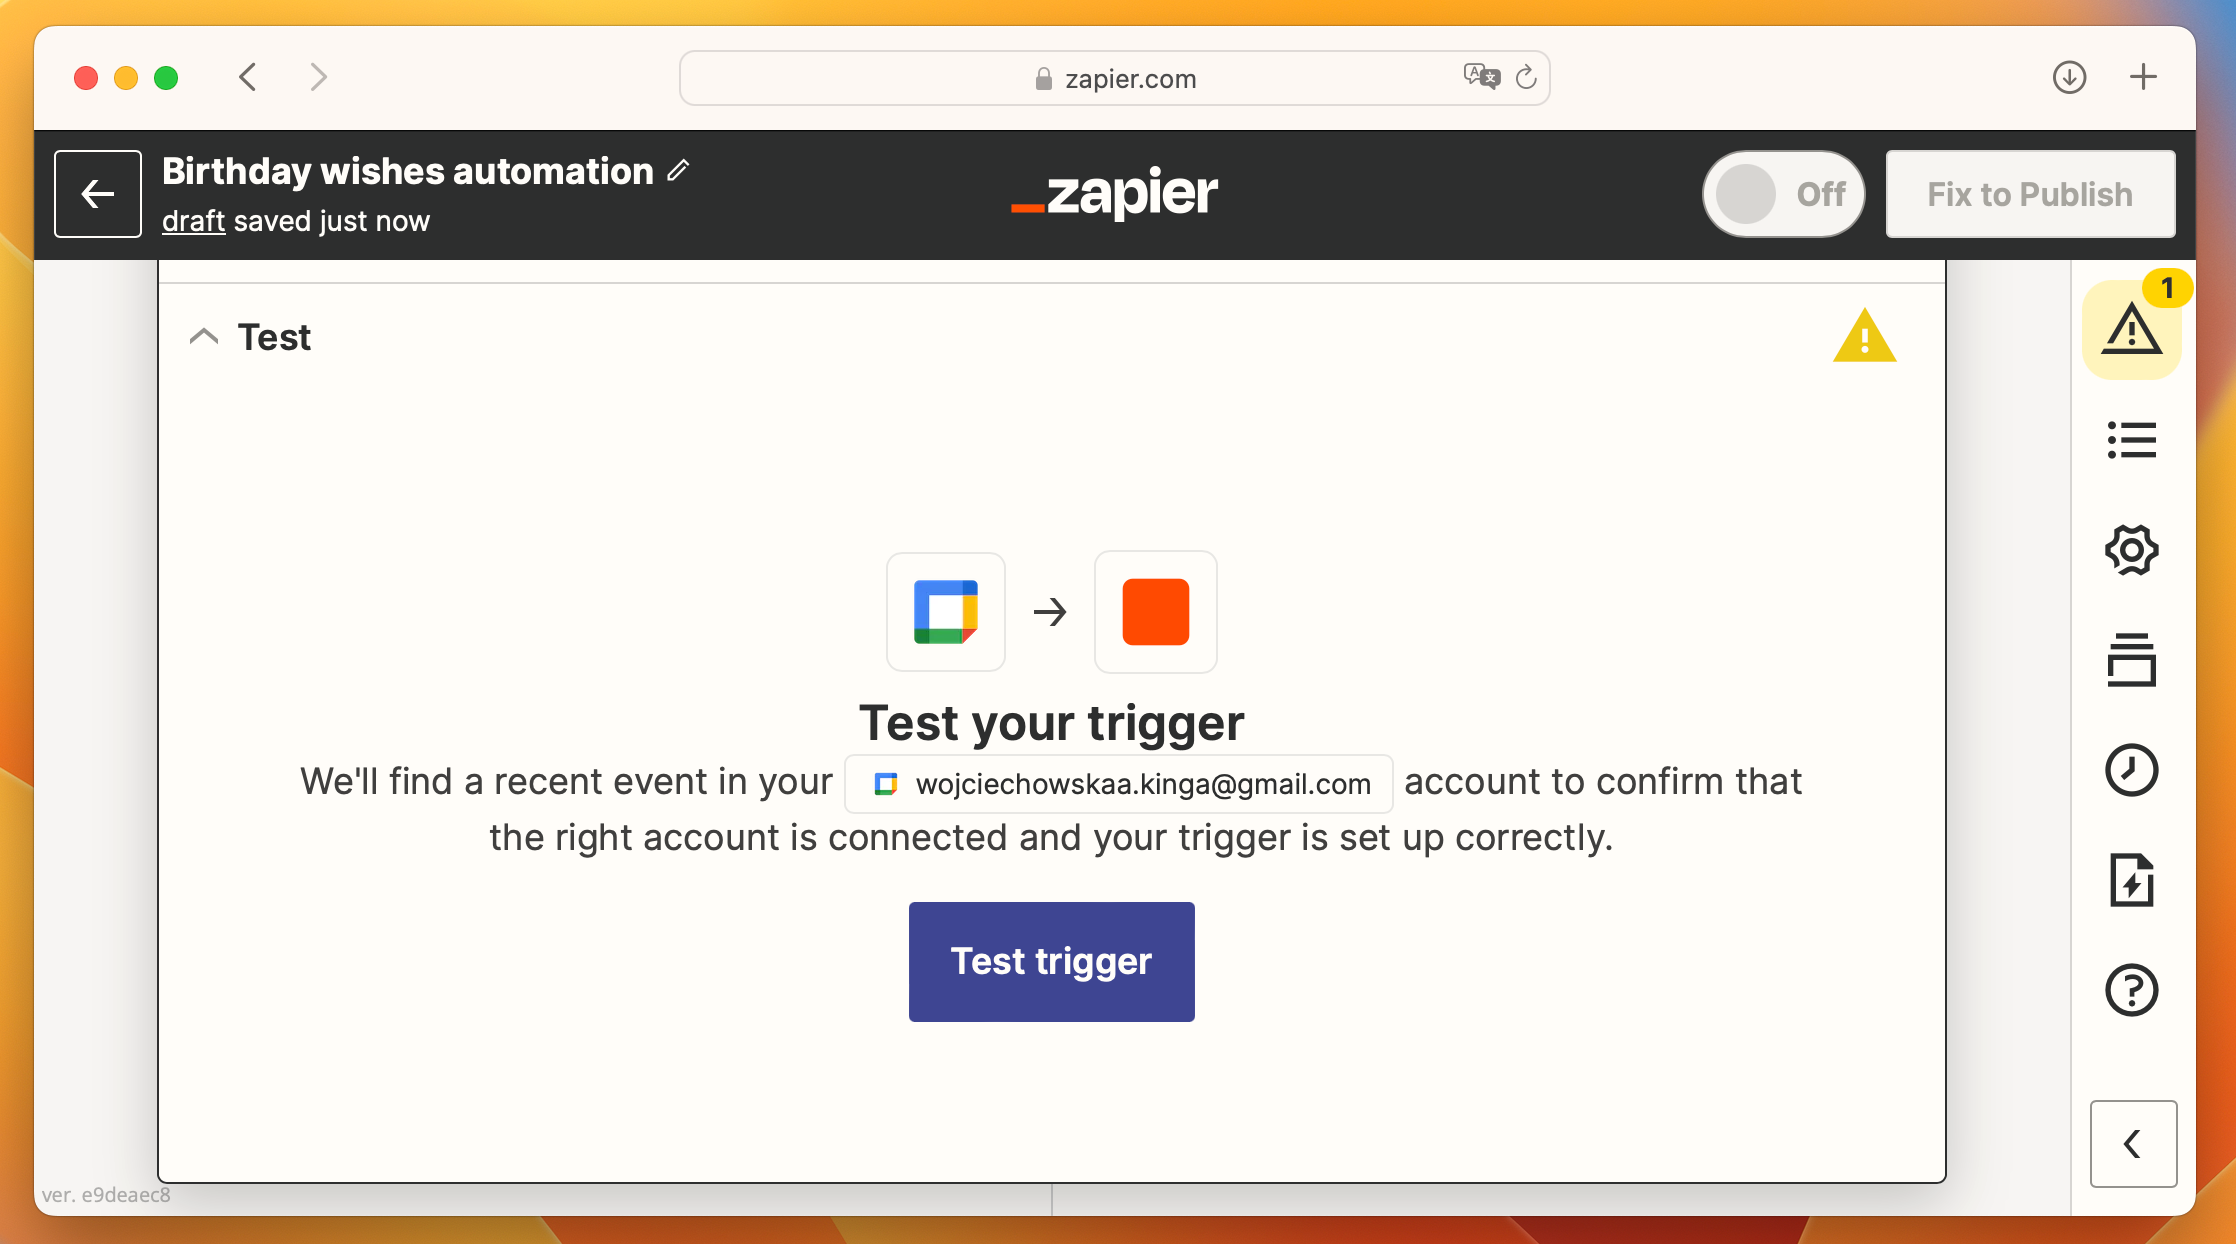 Testing the trigger in Zapier